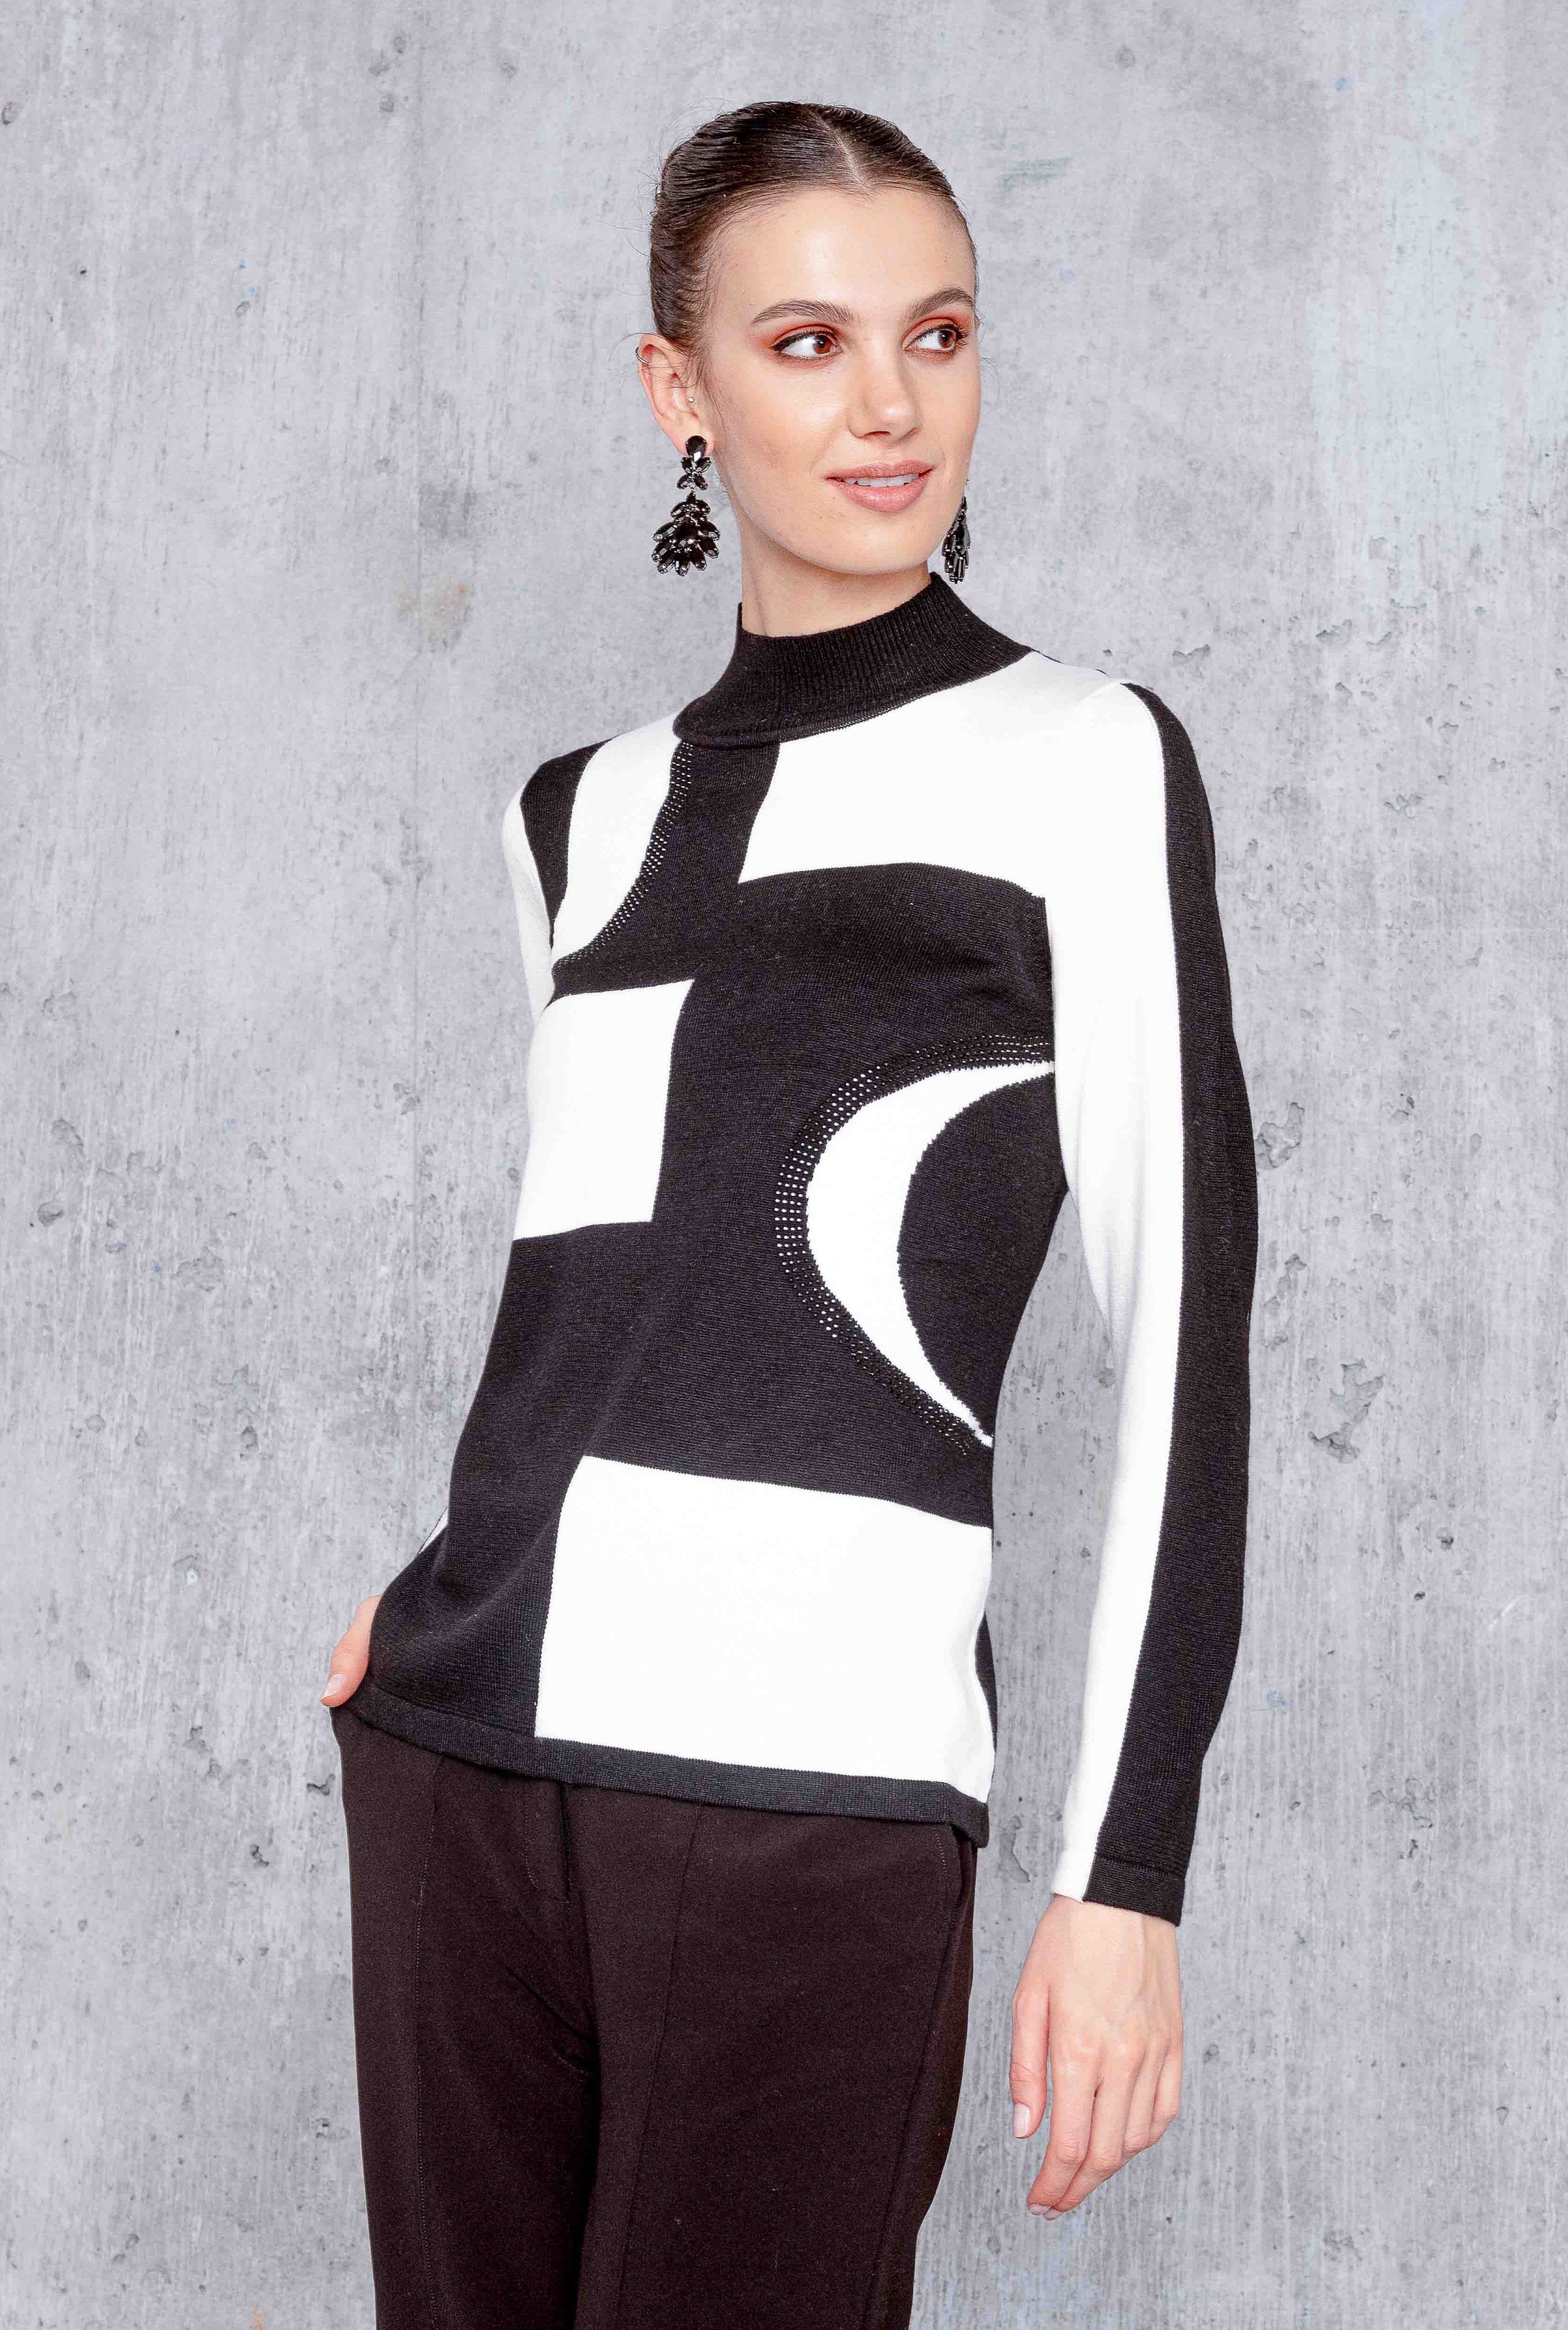 Black & White Sweater - A44378